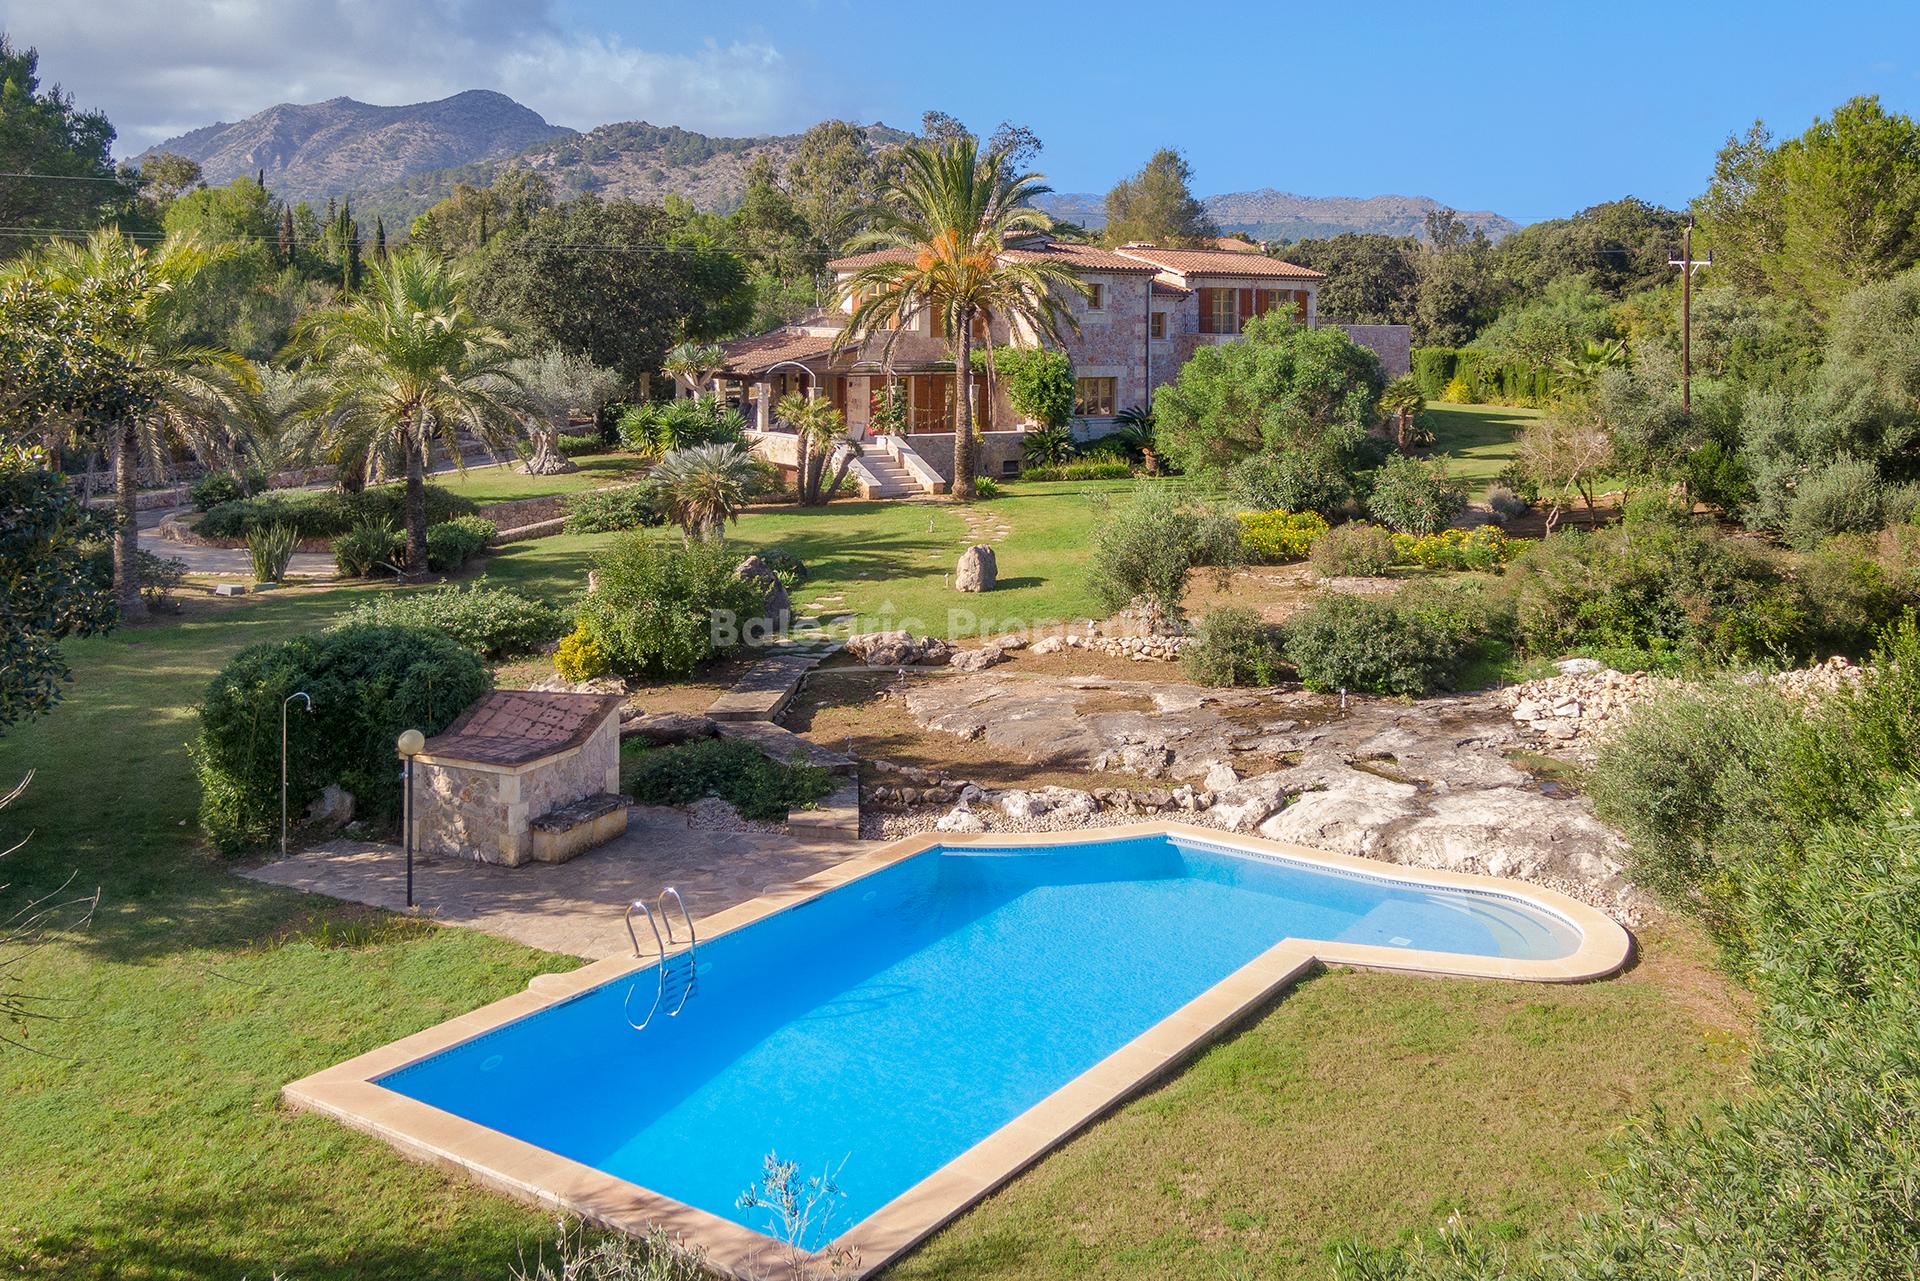 Wonderful luxury finca for sale in a privileged area of Pollensa, Mallorca